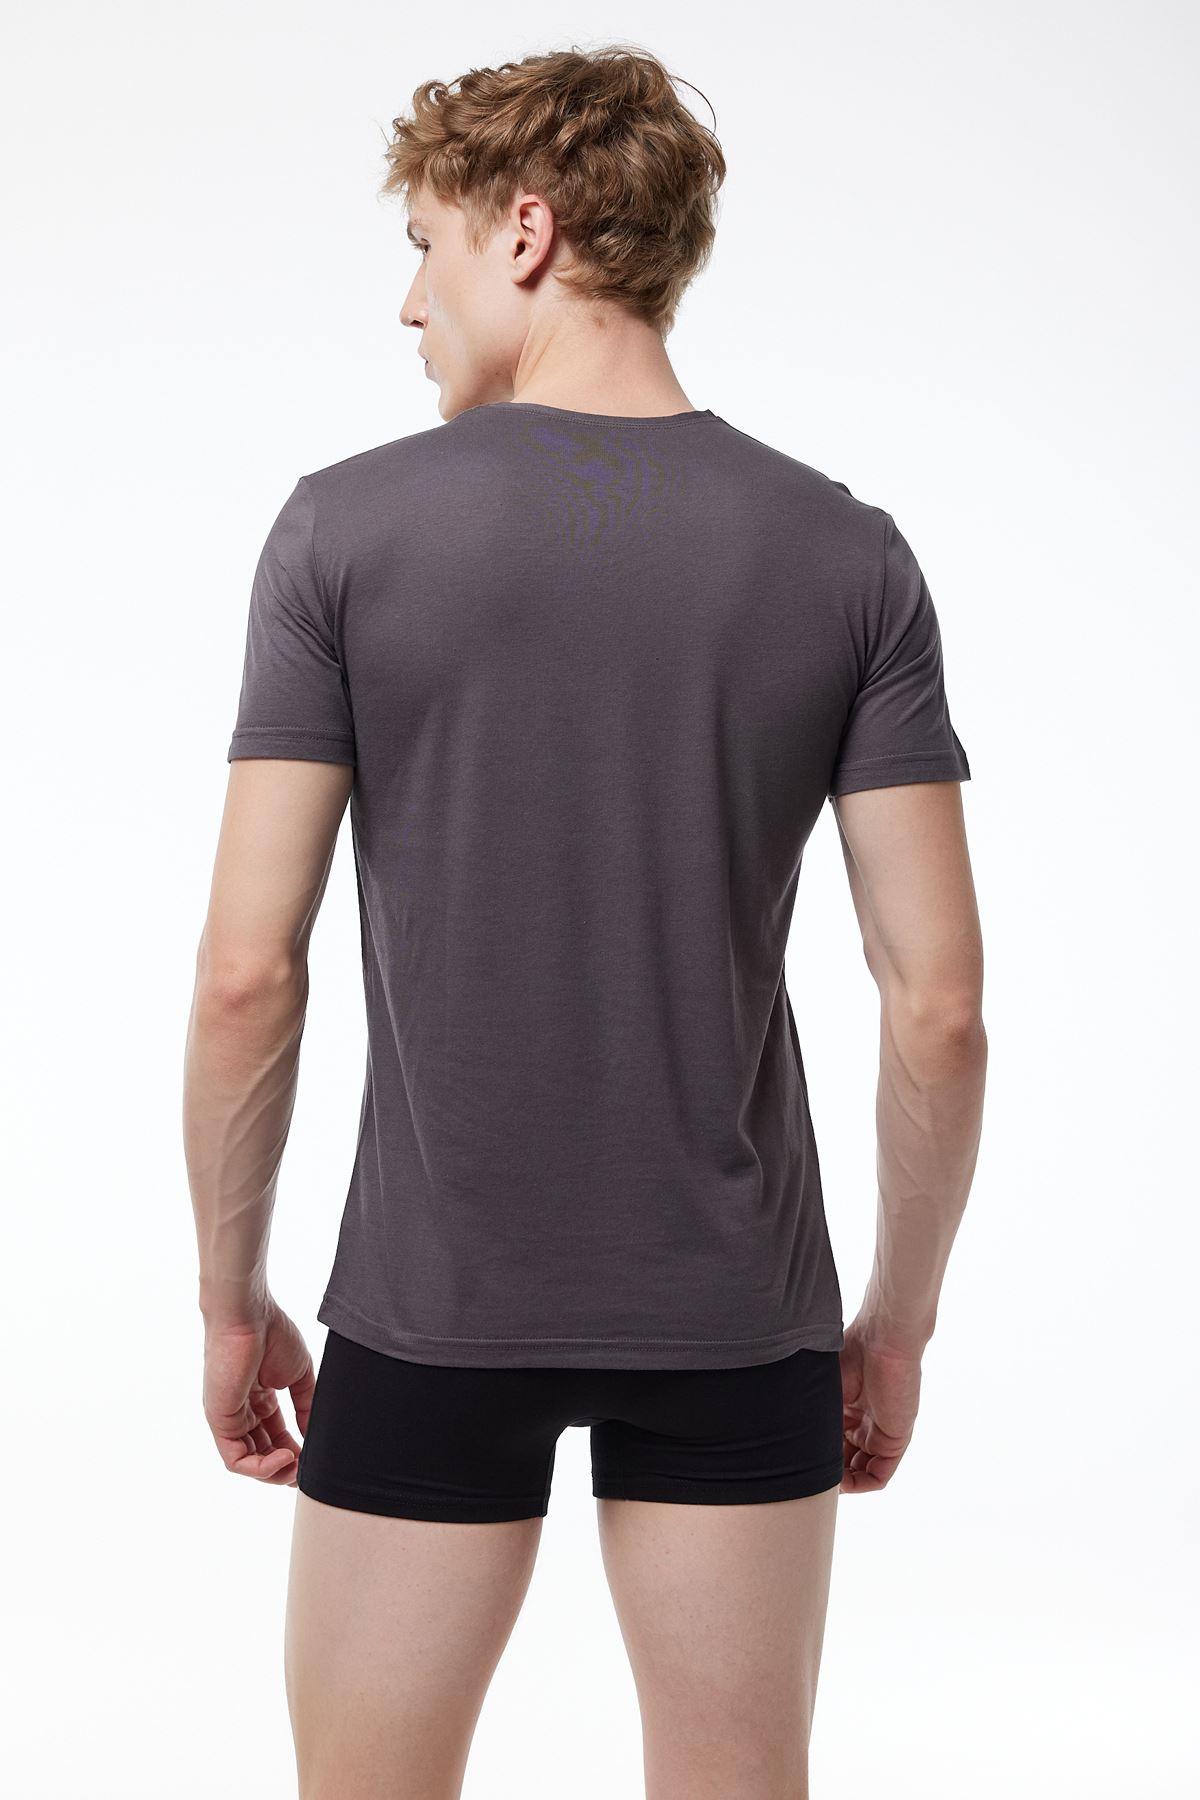 Erkek Füme Basic V Yaka İnce Modal Yaz Serinliği Tshirt 085